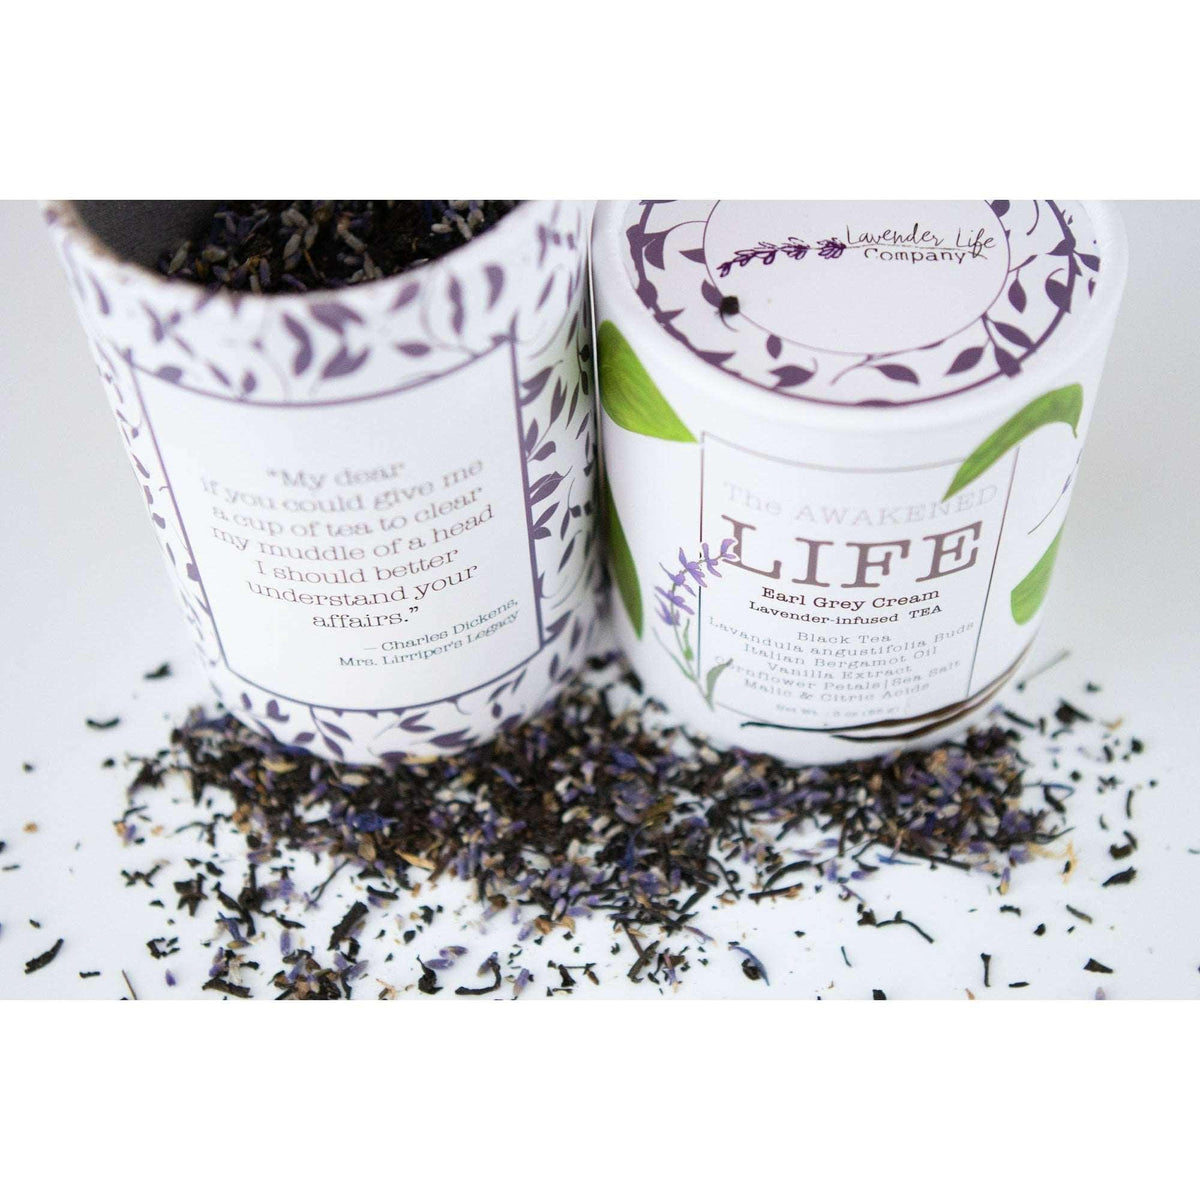 The AWAKENED LIFE Earl Grey Cream Lavender-Infused TEA - Lavender Life Company